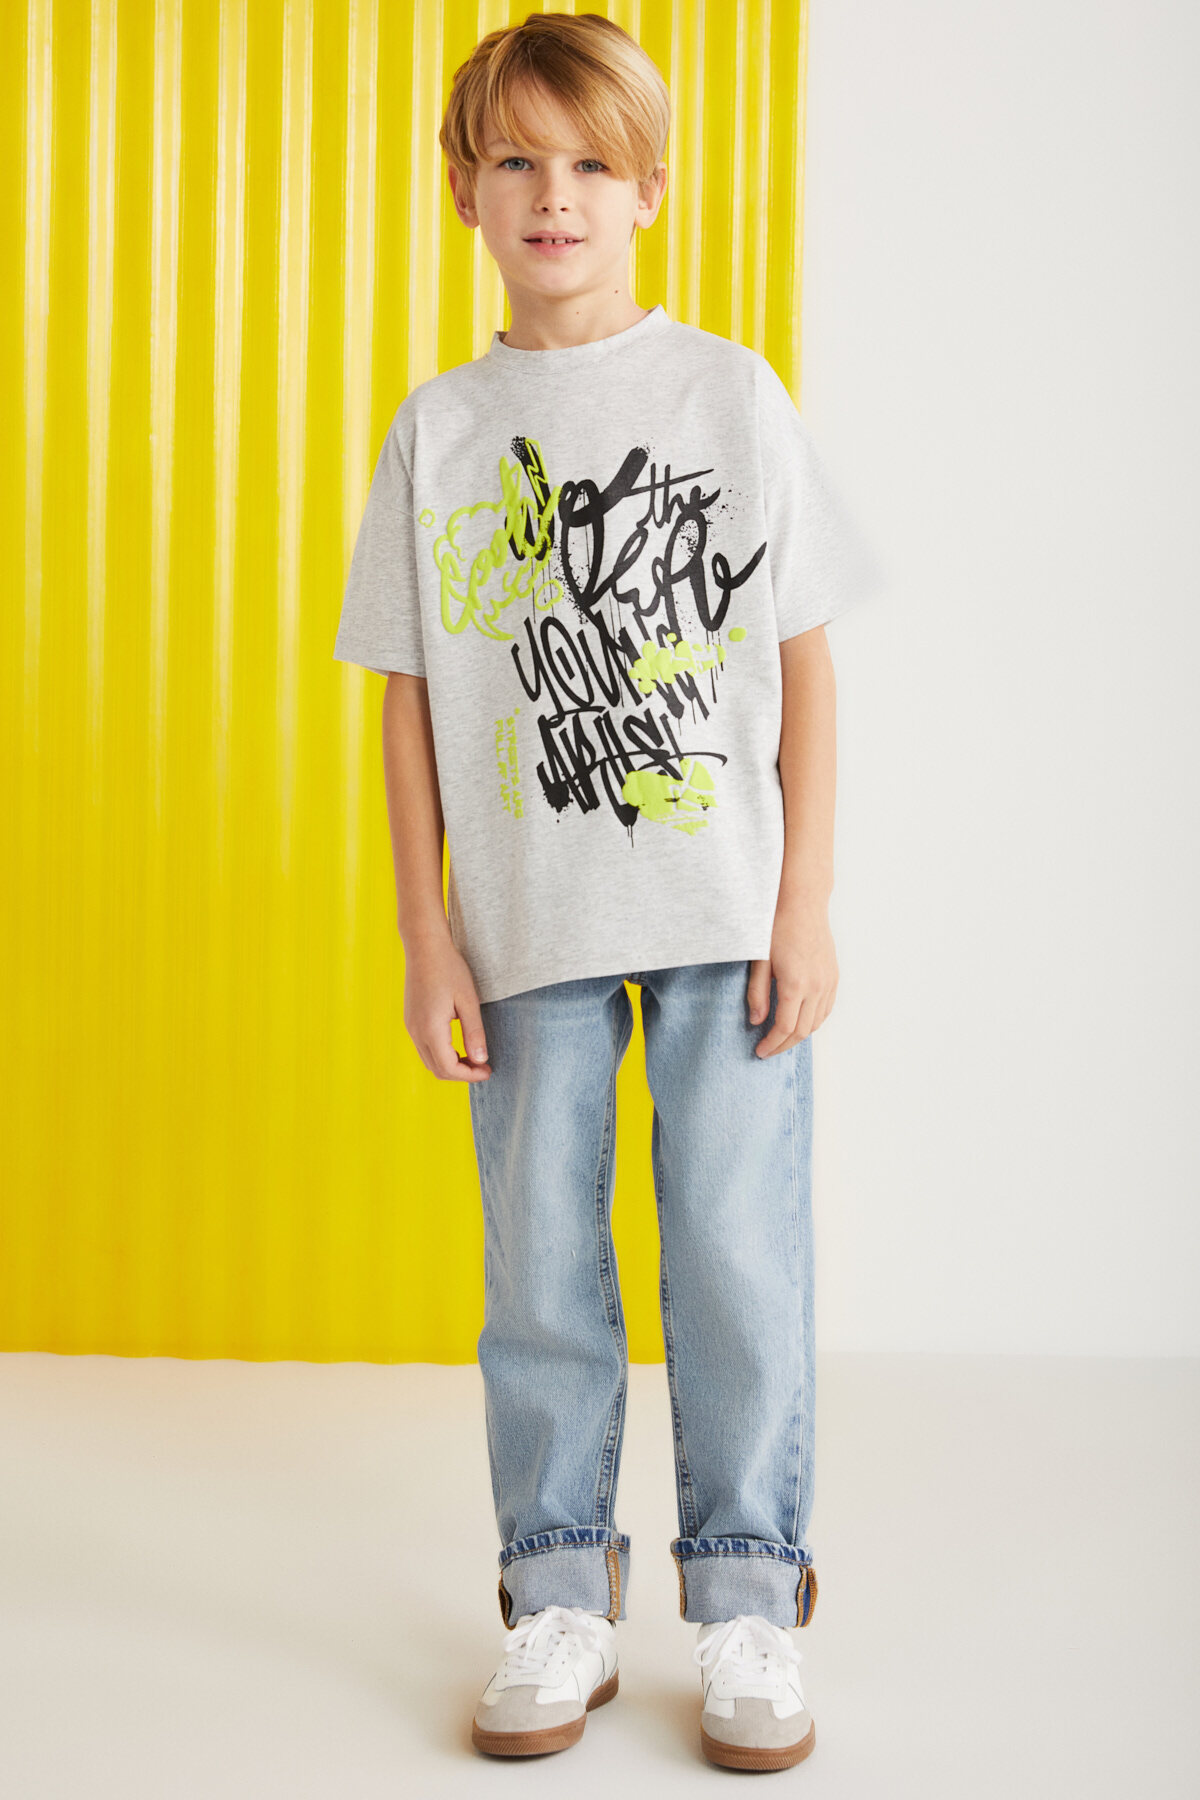 Jery Boy 100% Cotton Printed Short Sleeve Grimelange T-shirt